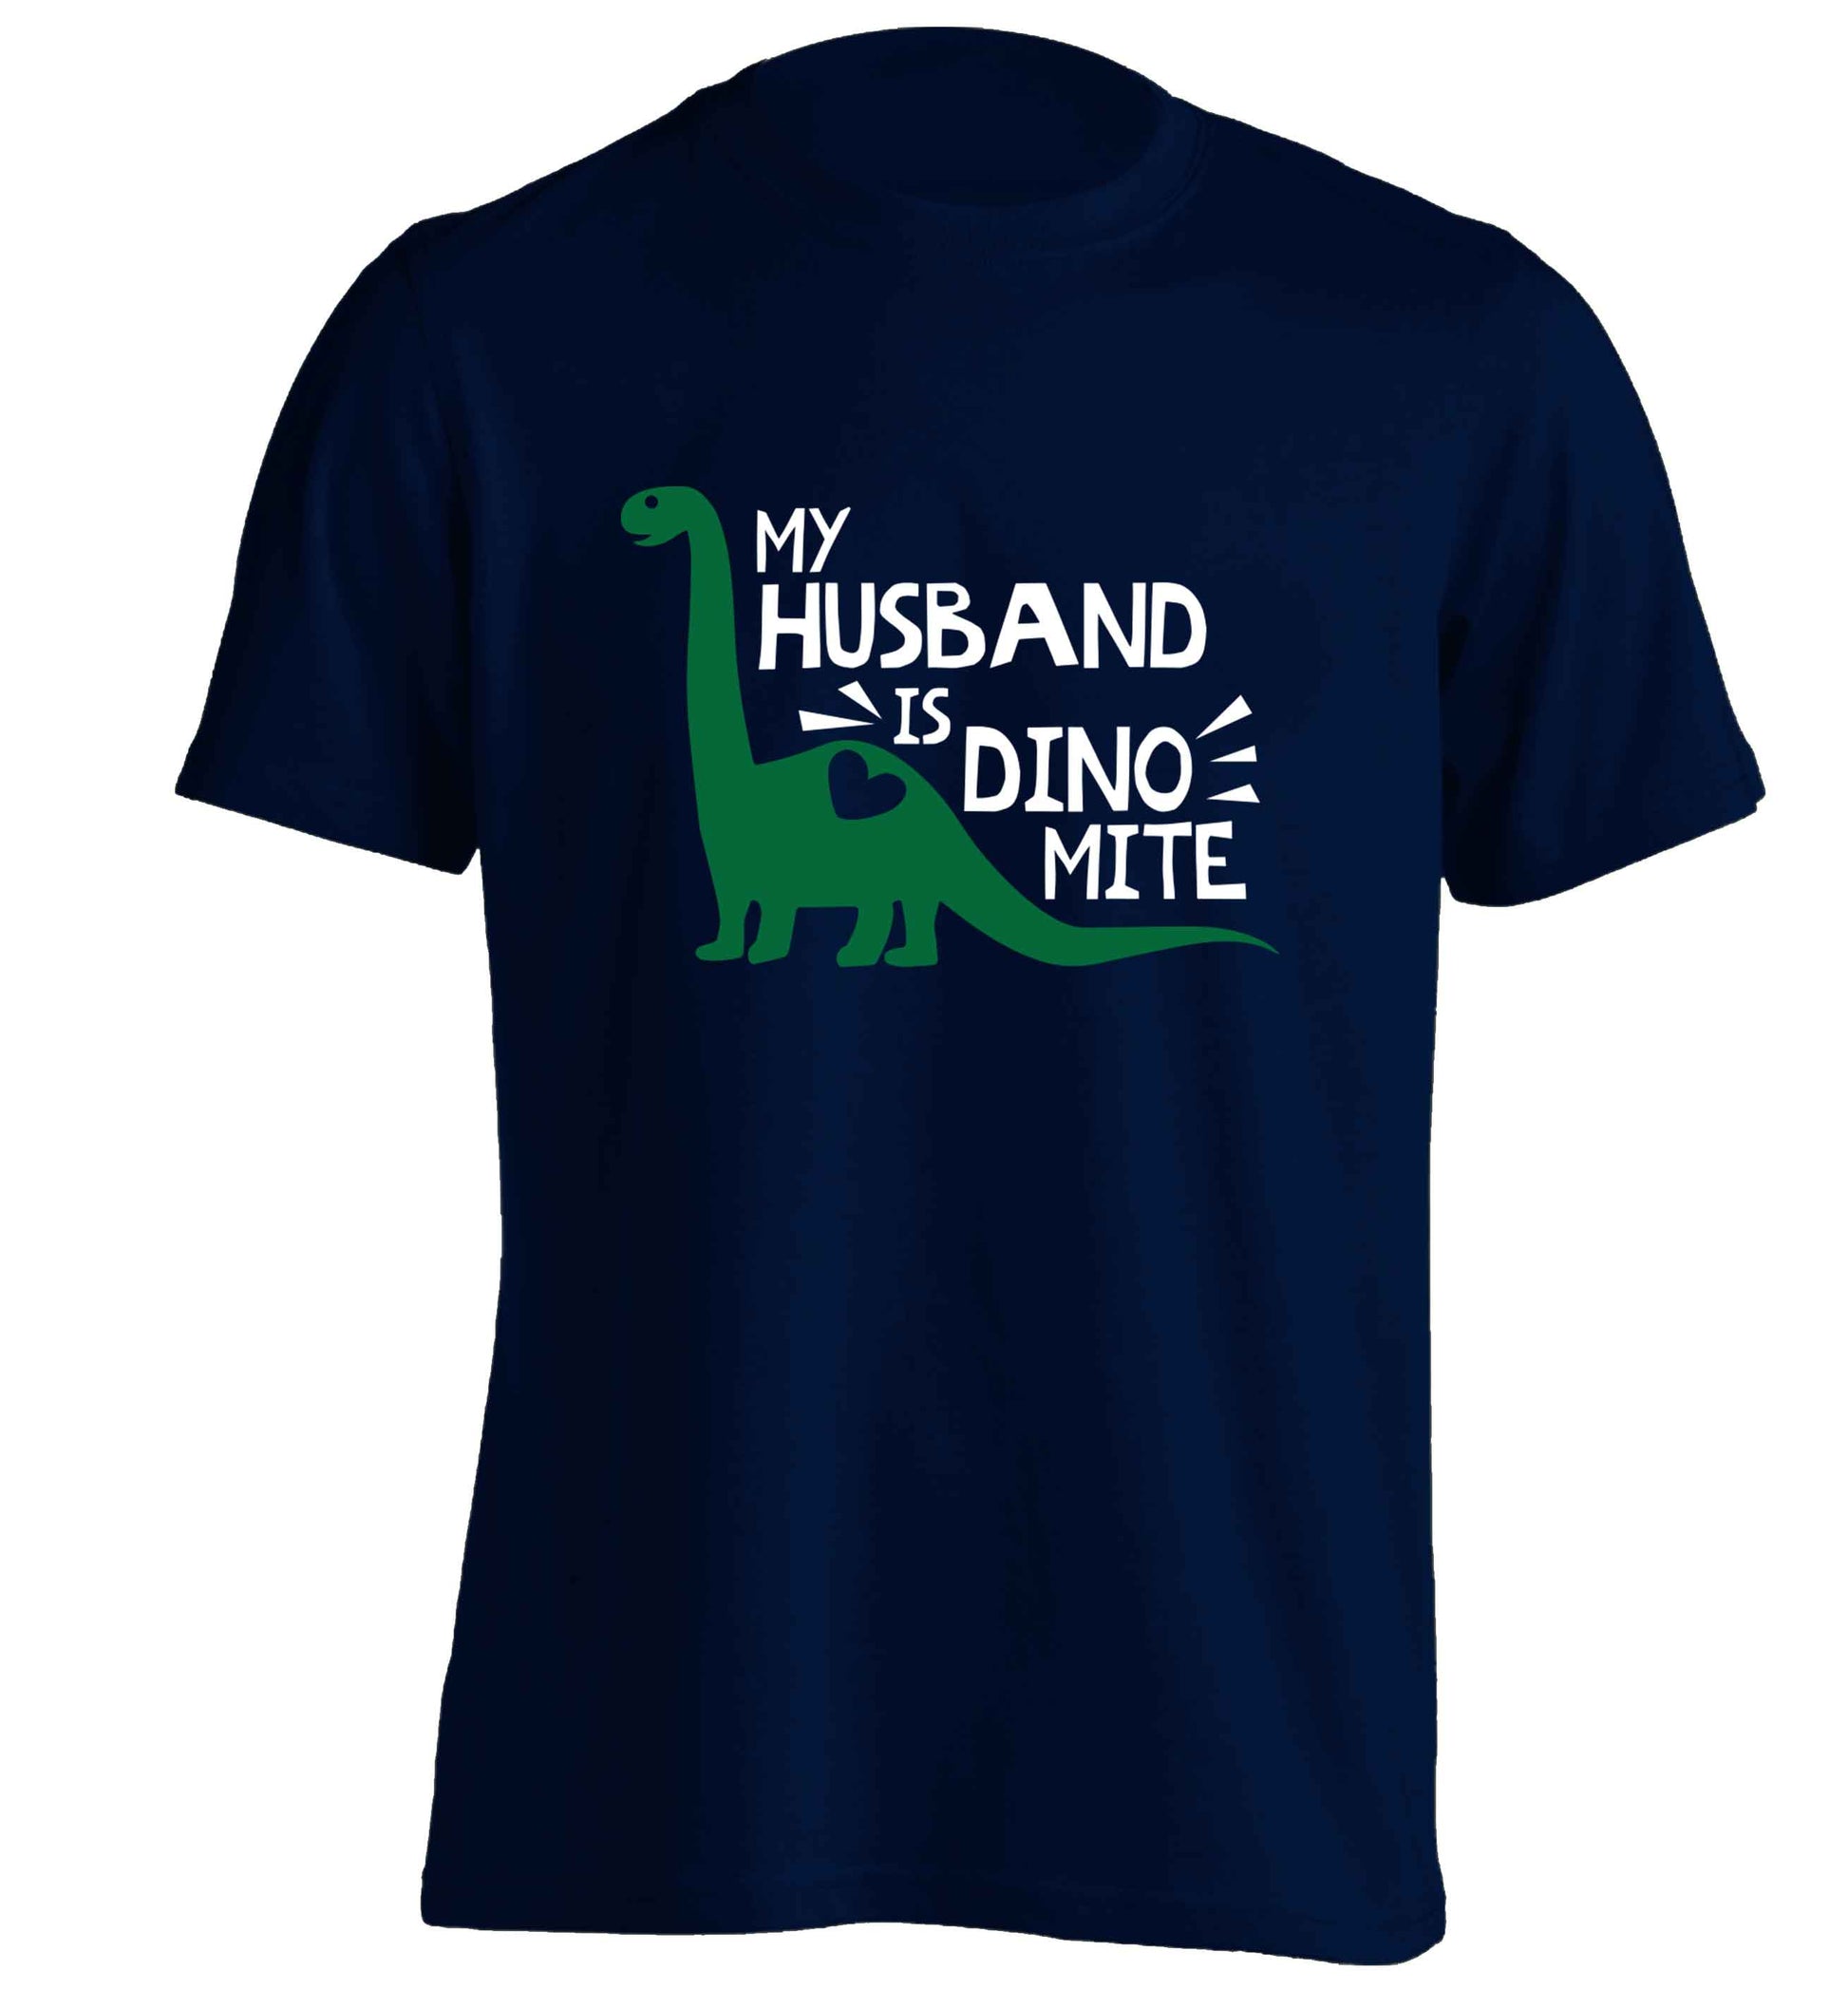 My husband is dinomite! adults unisex navy Tshirt 2XL